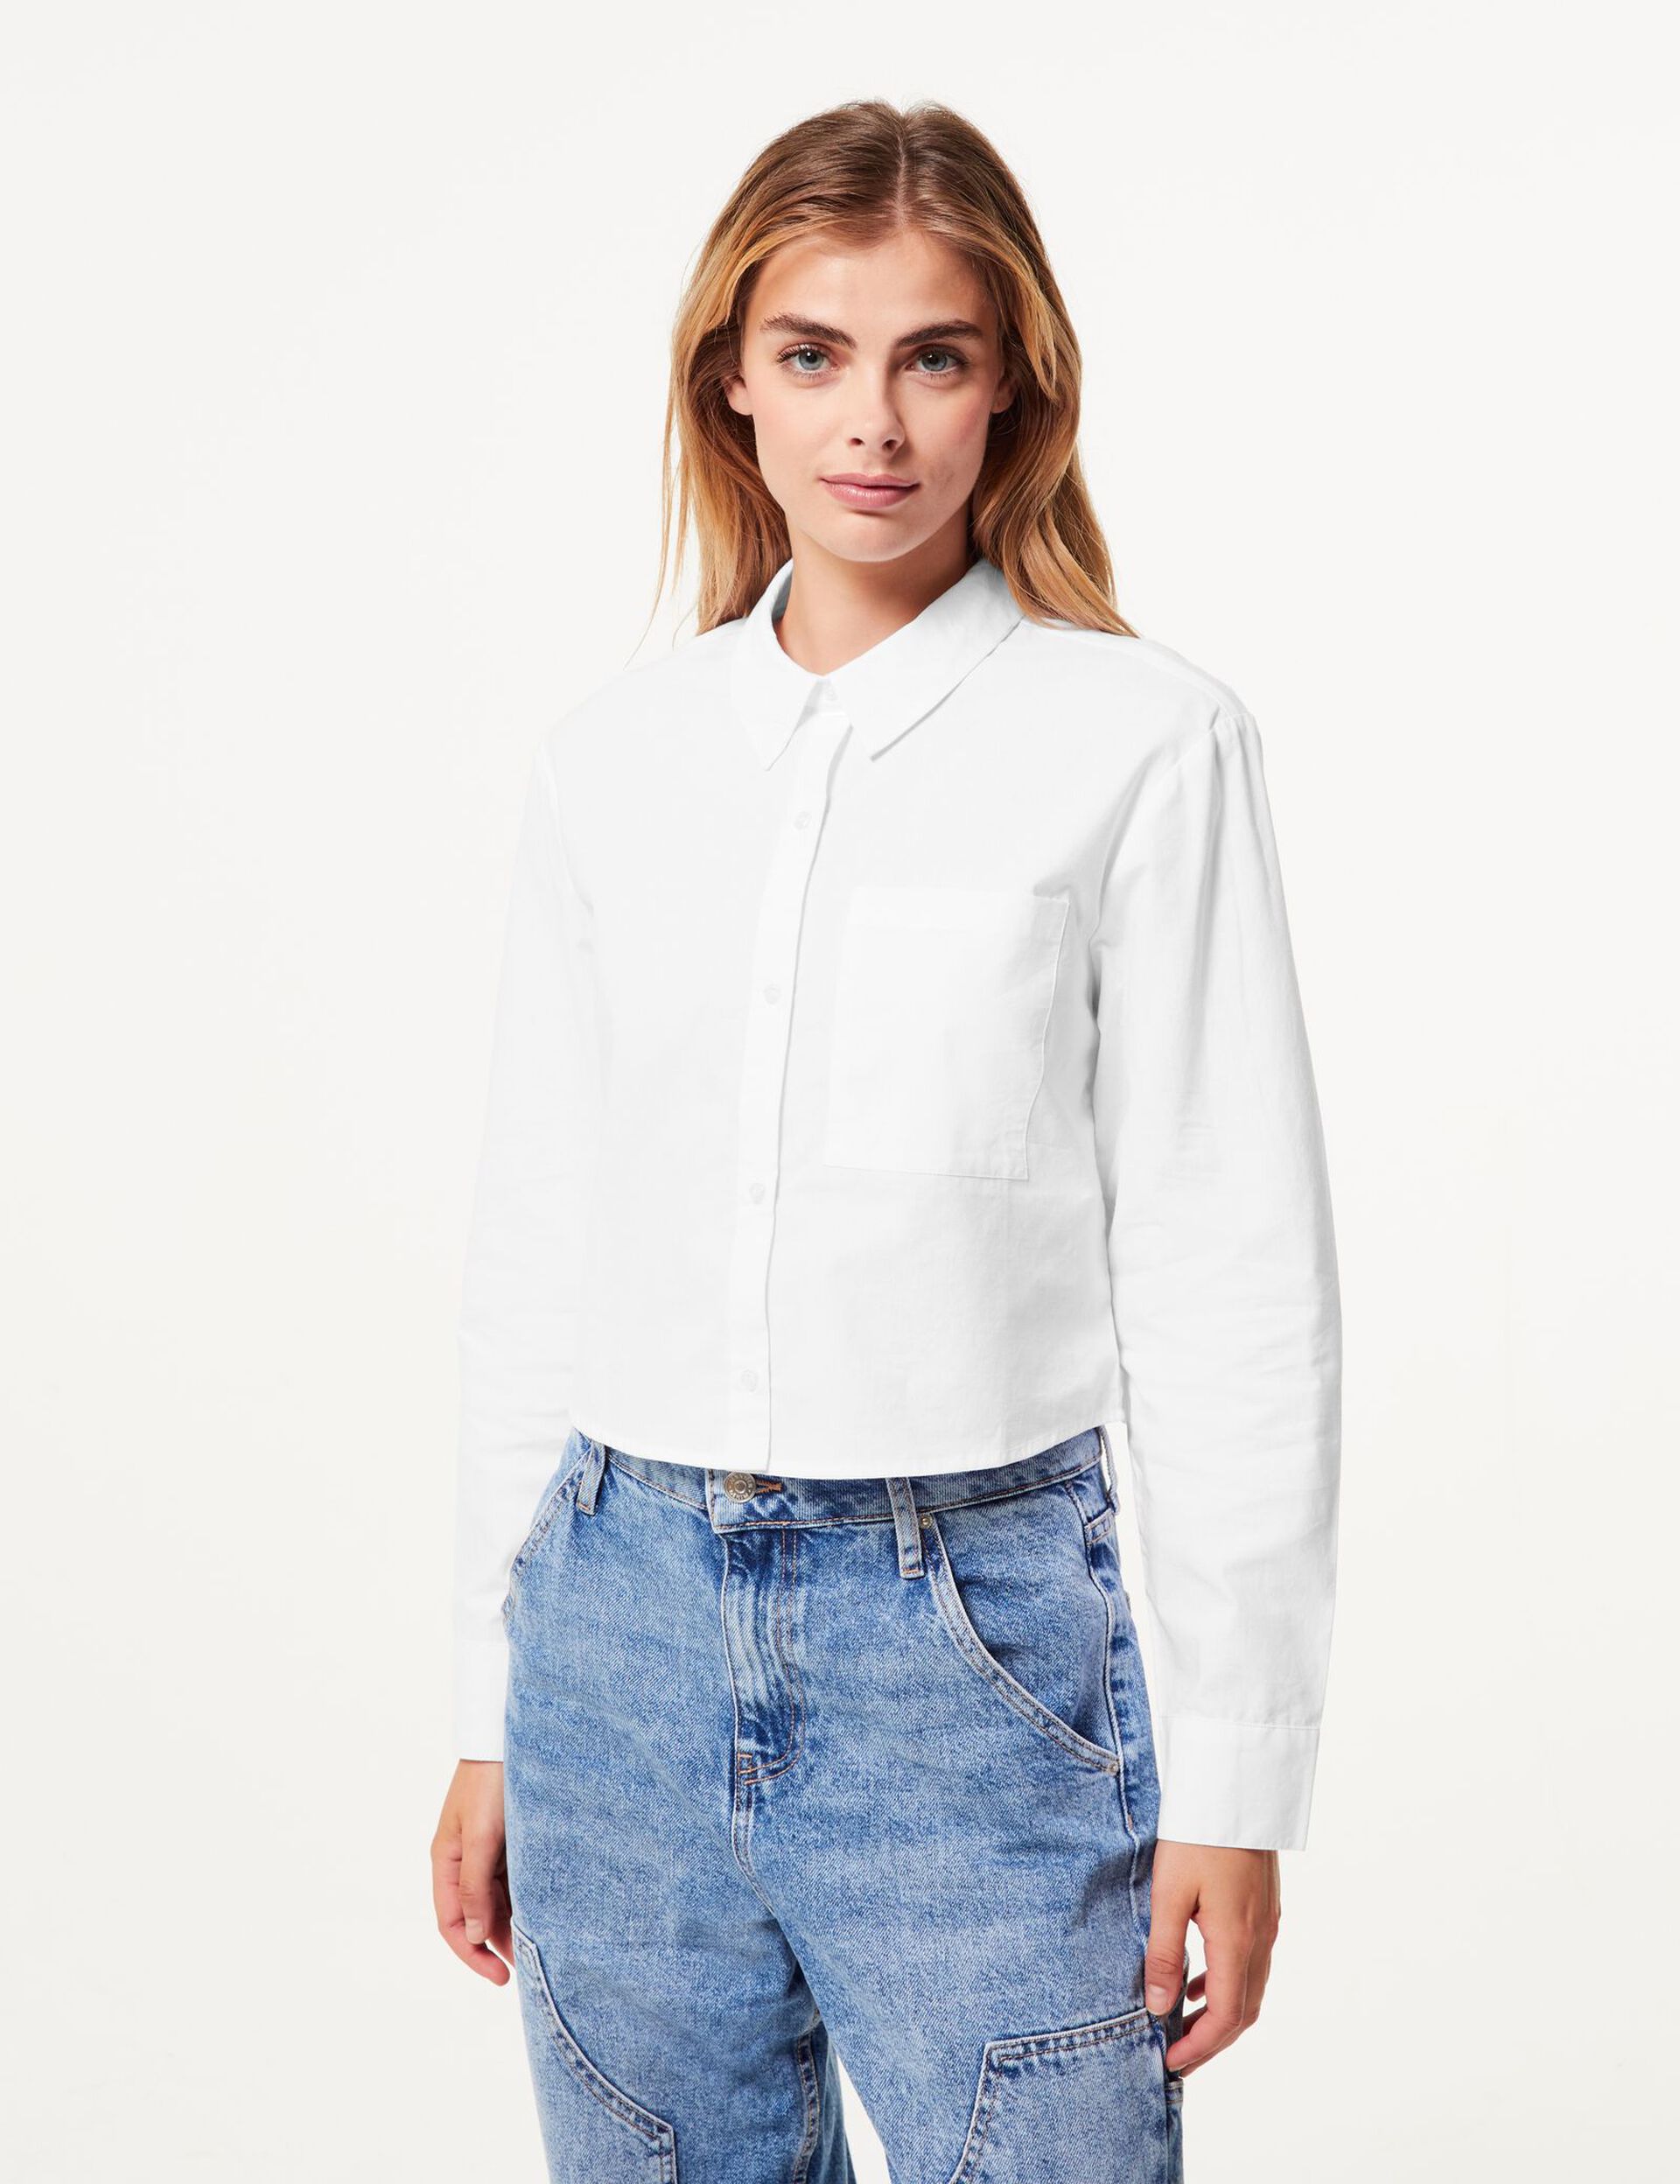 Chemise blanche courte